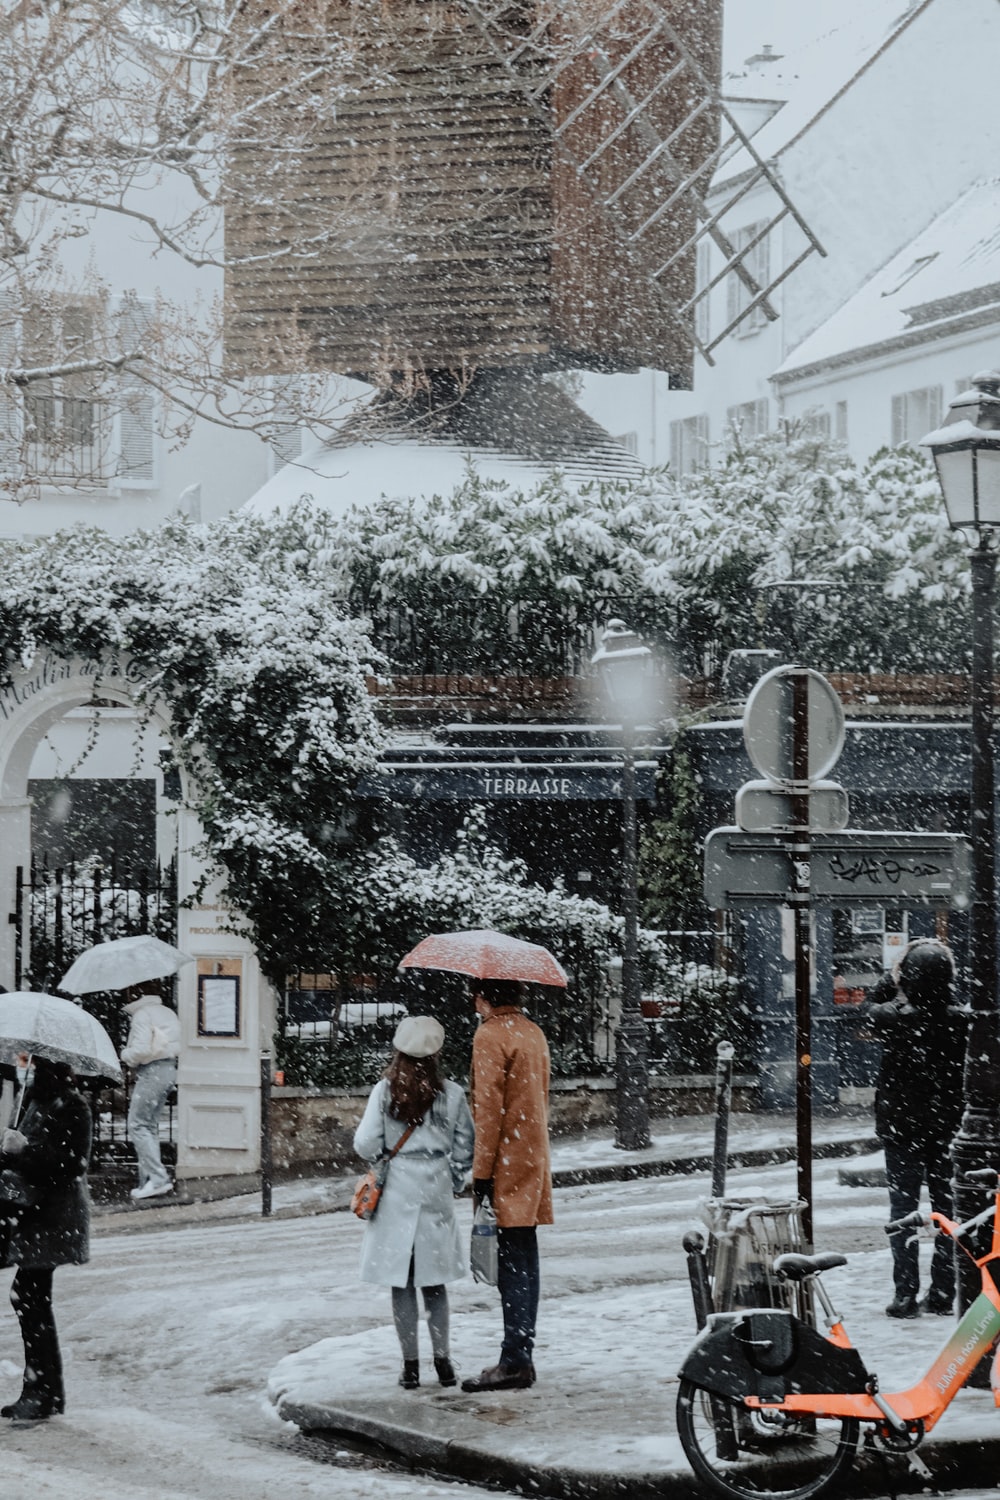 Paris Winter Picture. Download Free Image